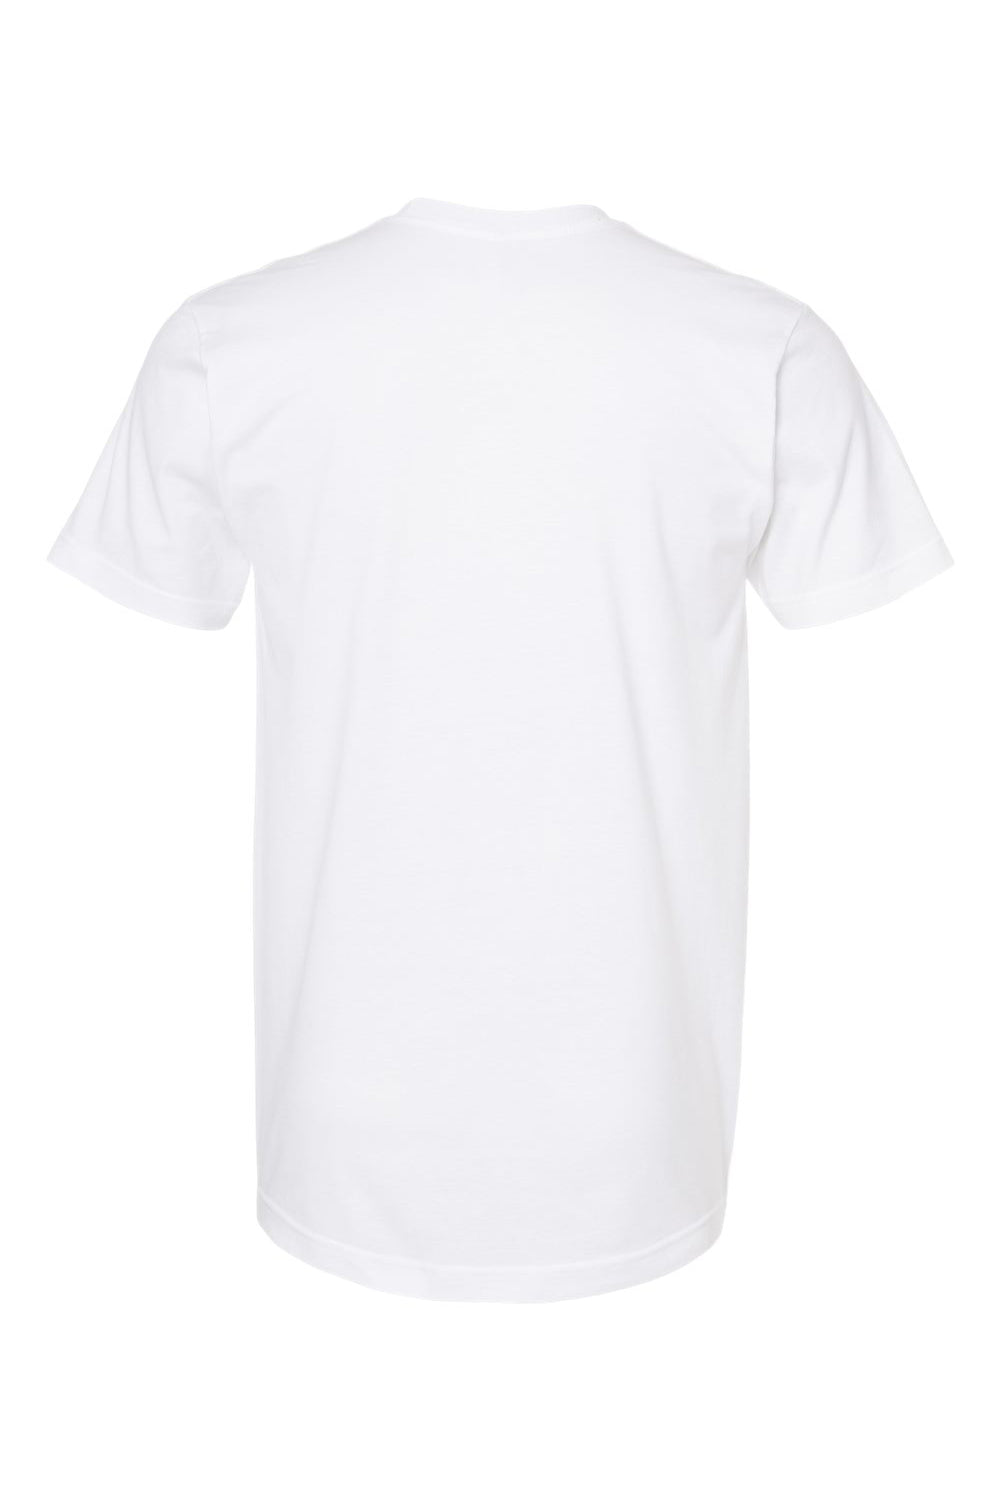 Tultex 202 Mens Fine Jersey Short Sleeve Crewneck T-Shirt White Flat Back